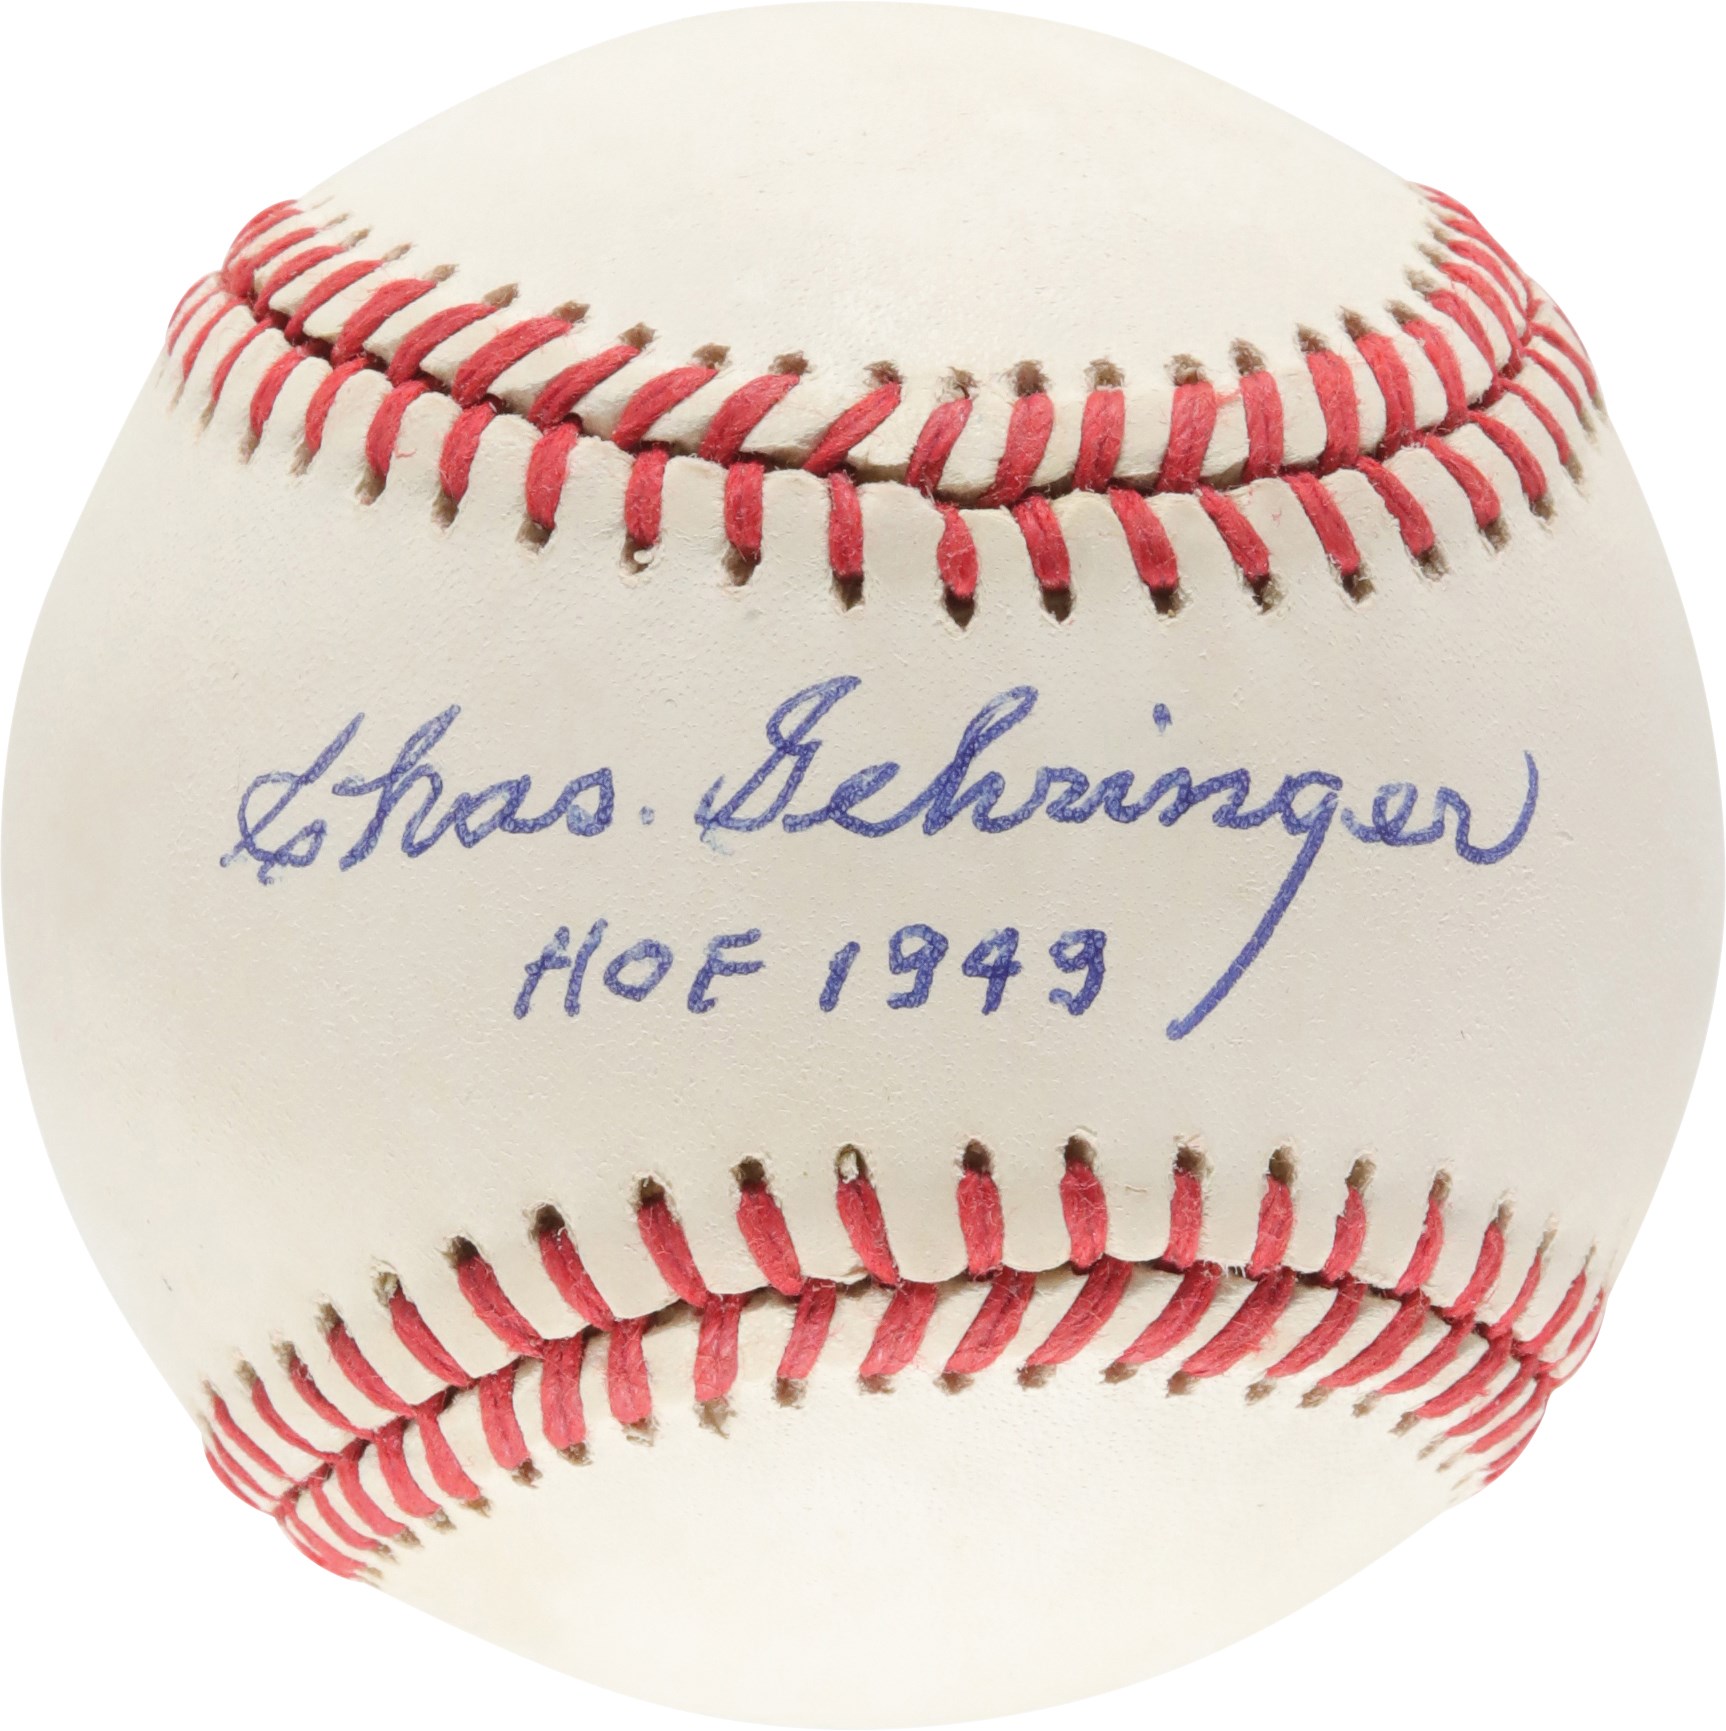 - Charlie Gehringer "HOF 1949" Single Signed Baseball (PSA MINT 9 Auto)